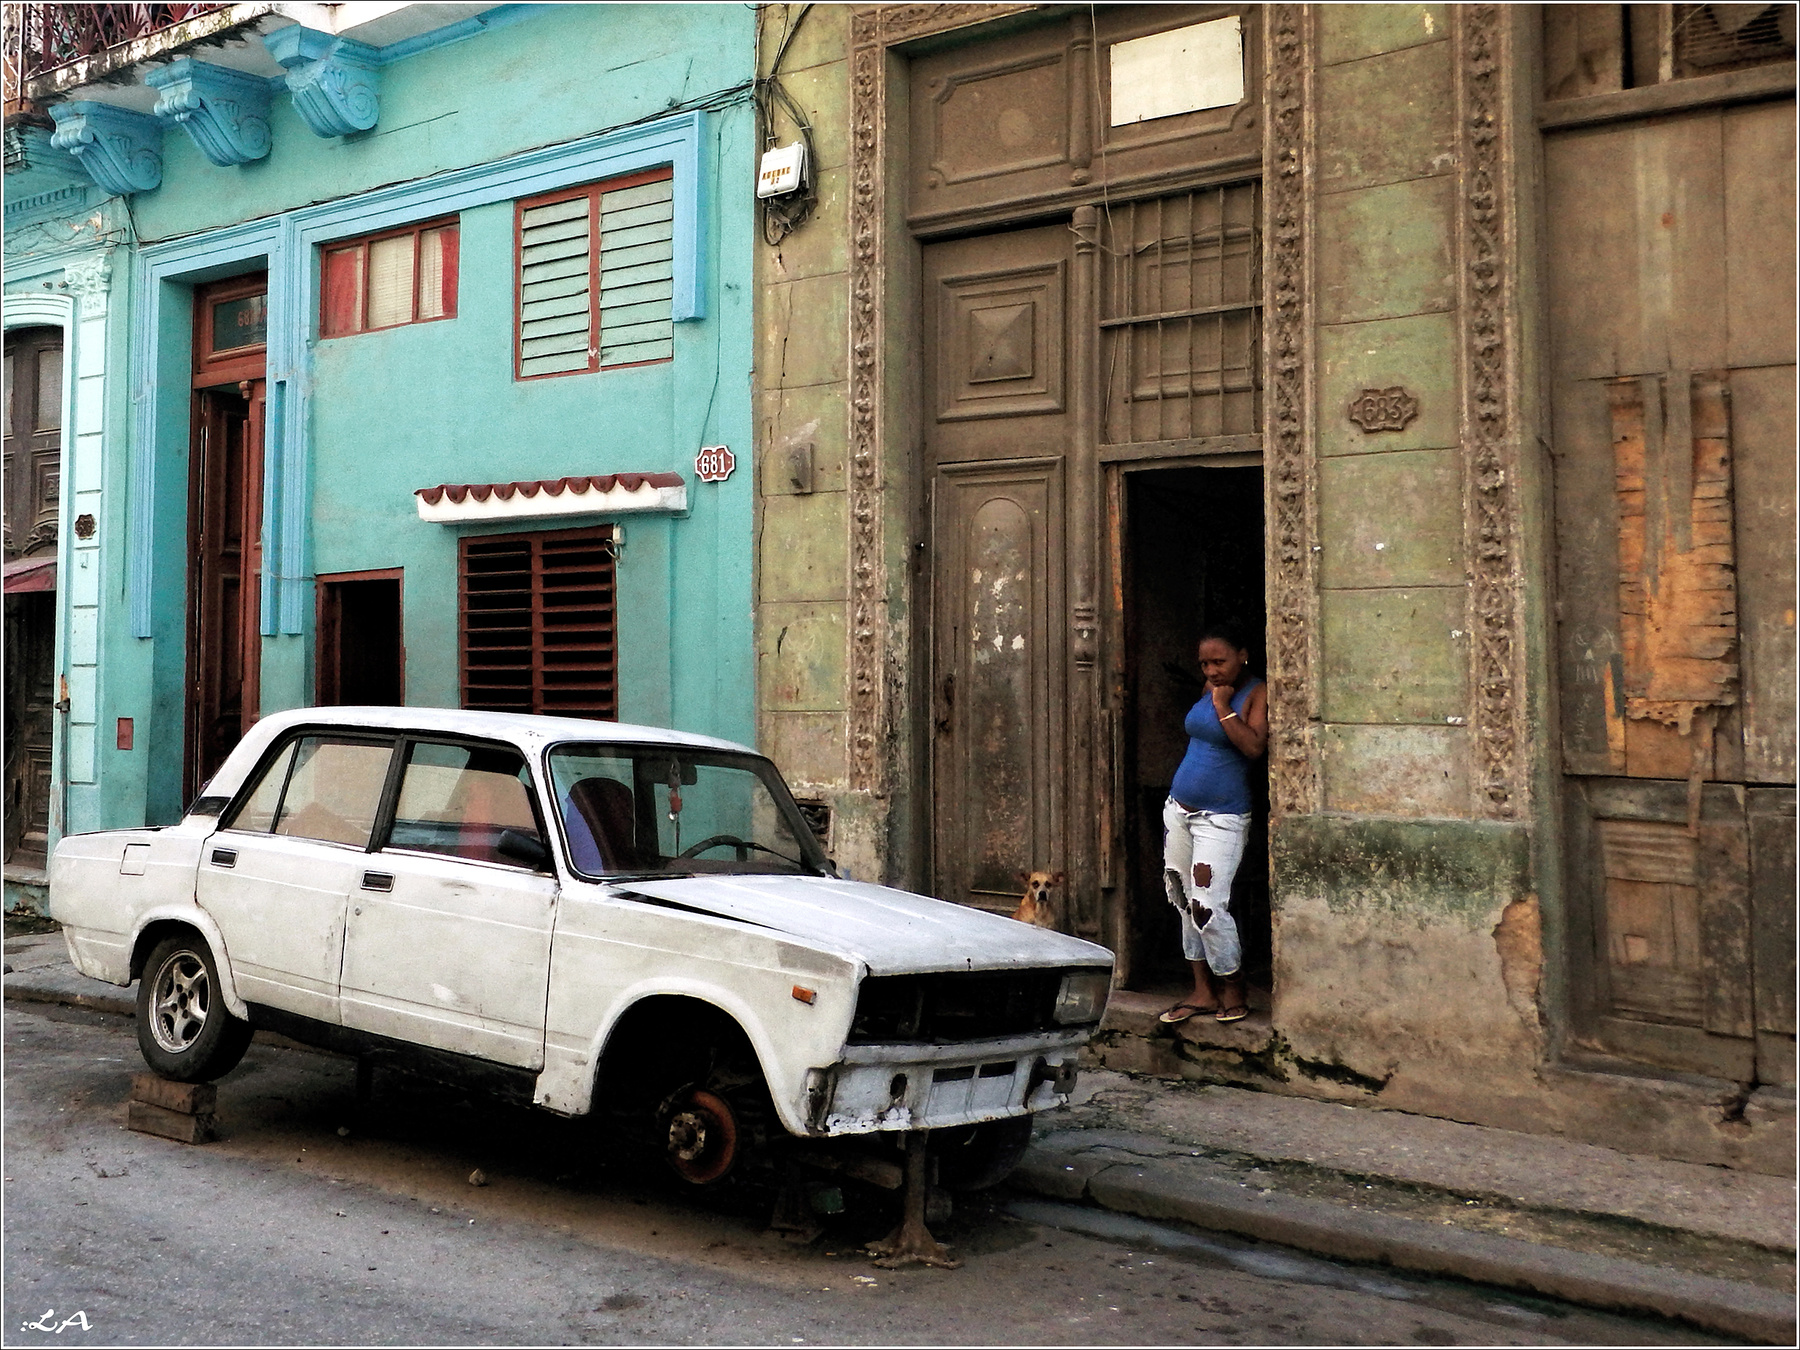 *И Белый Автомобиль у порога...* фотография путешествия Гавана центр улица жанр автомобиль Фото.Сайт Светлана Мамакина Lihgra Adventure